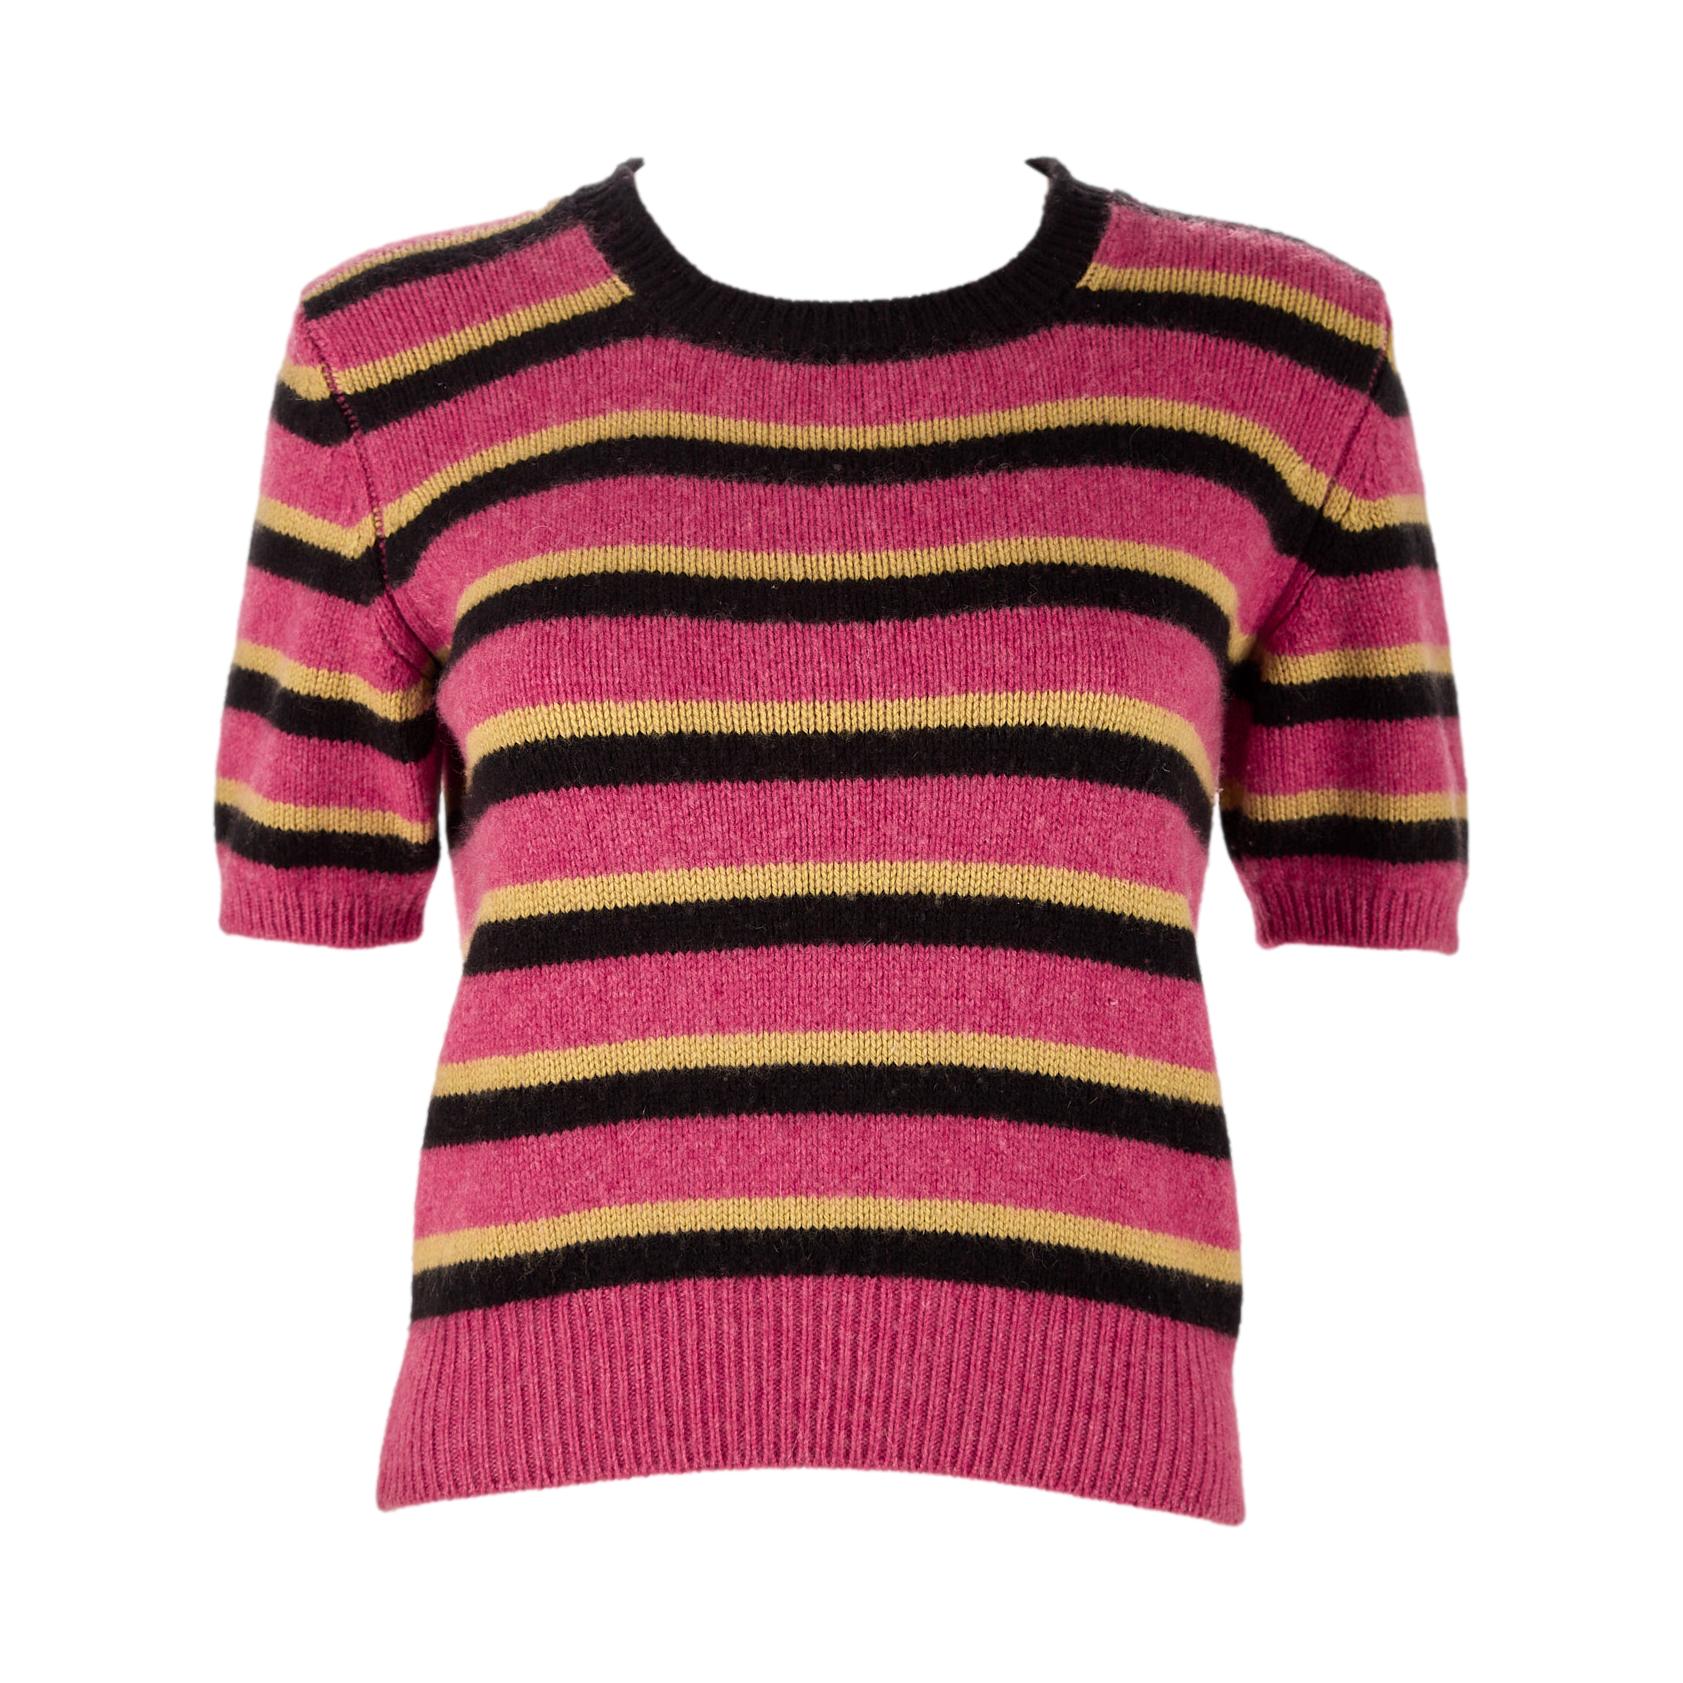 Chanel Pink Striped Sweater Set